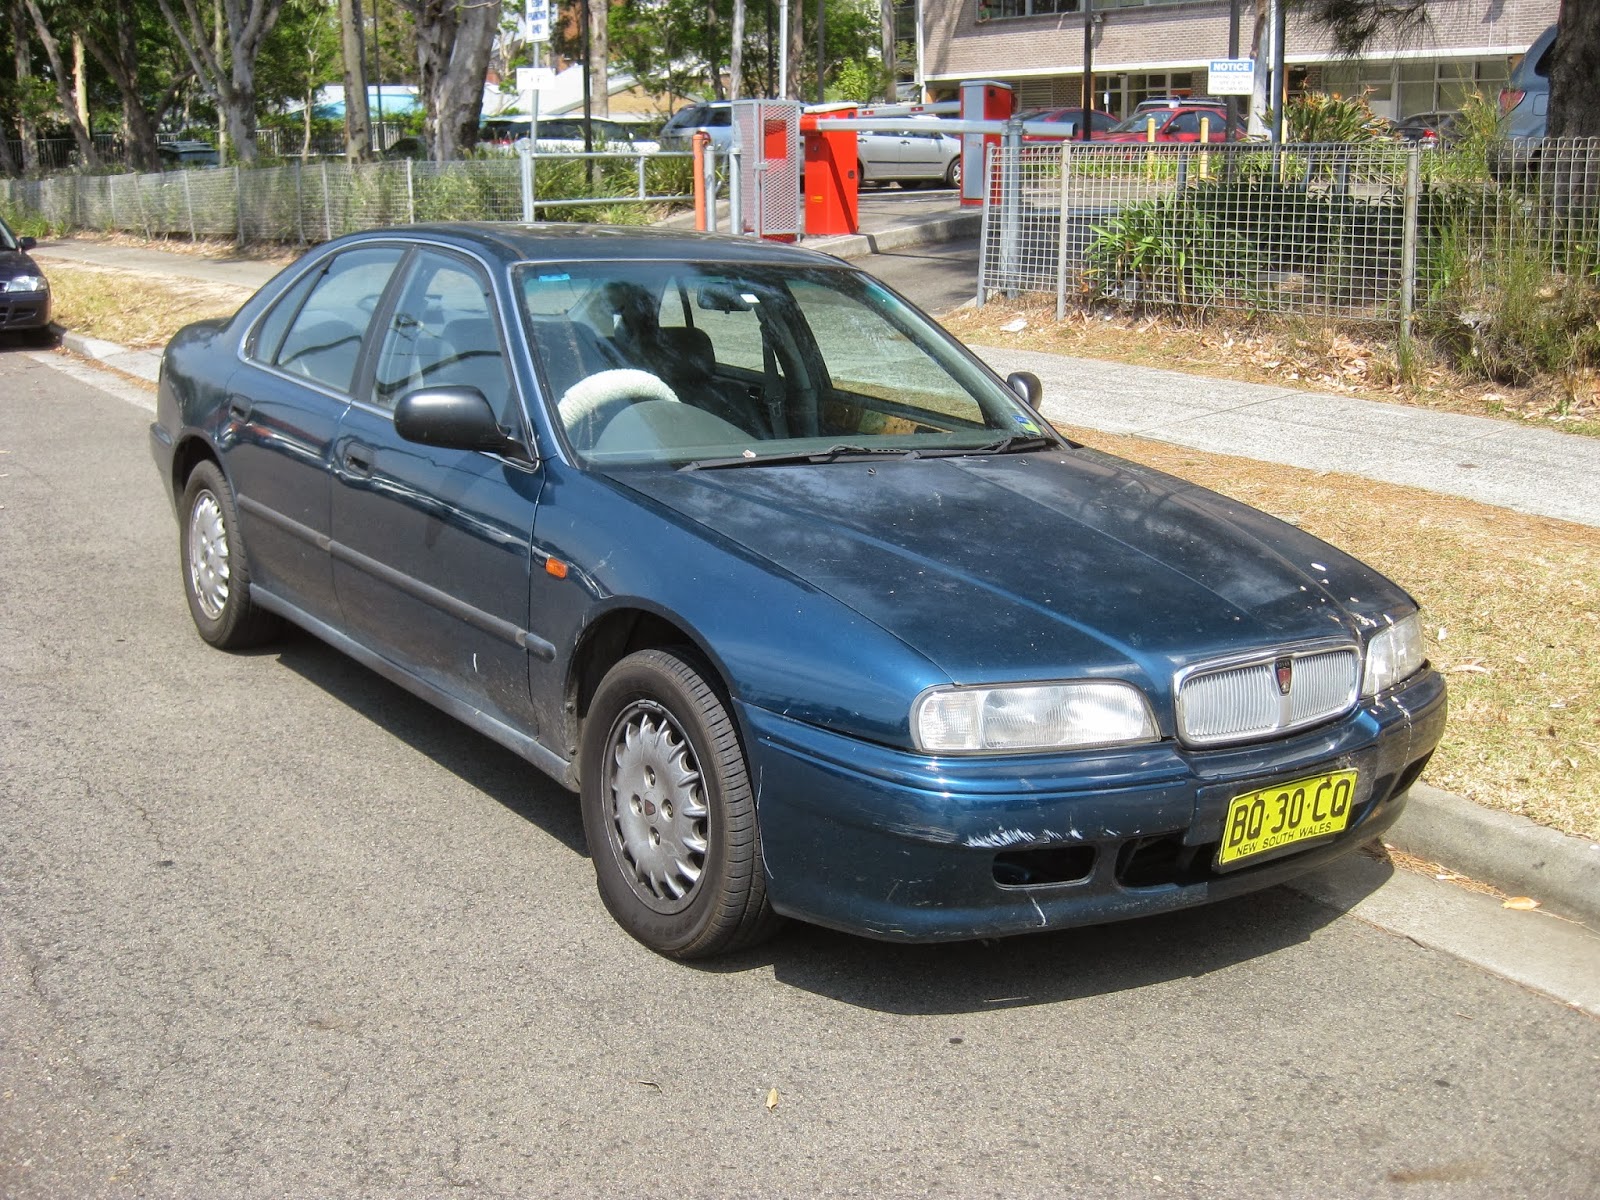 aussie-old-parked-cars-1993-rover-623-sli